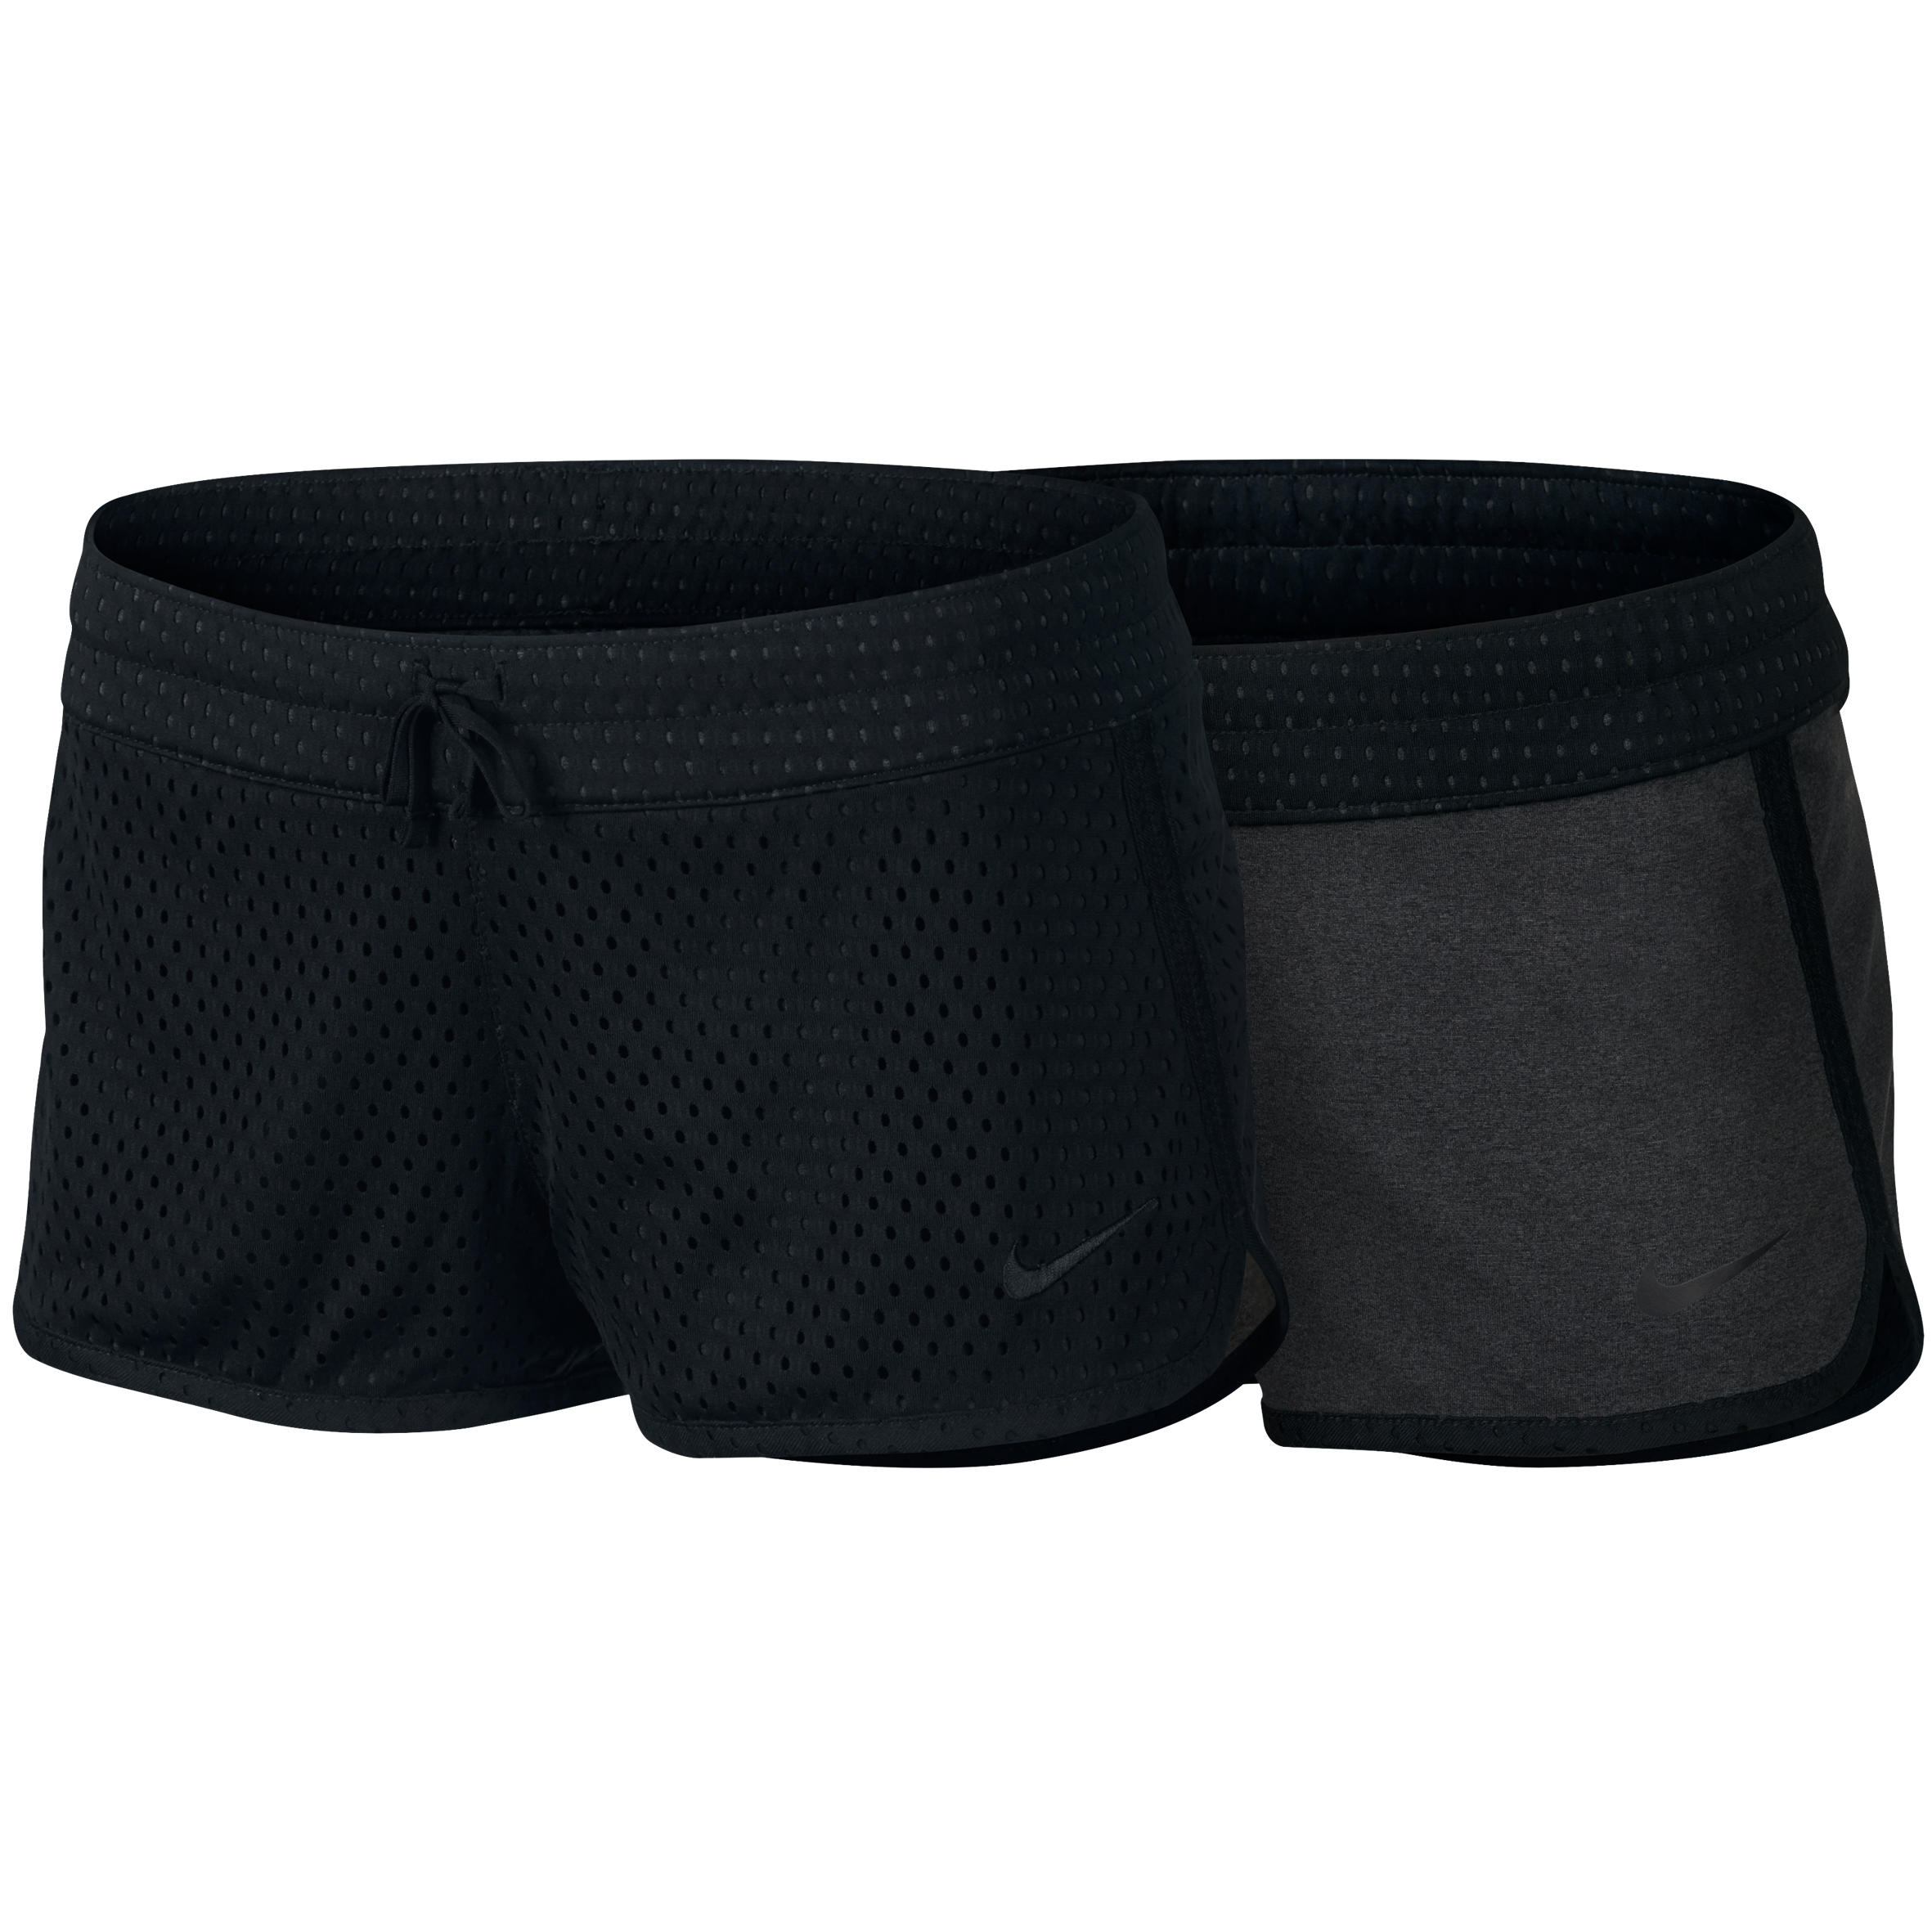 Nike Women's Fitness Reversible Shorts - Black/grey